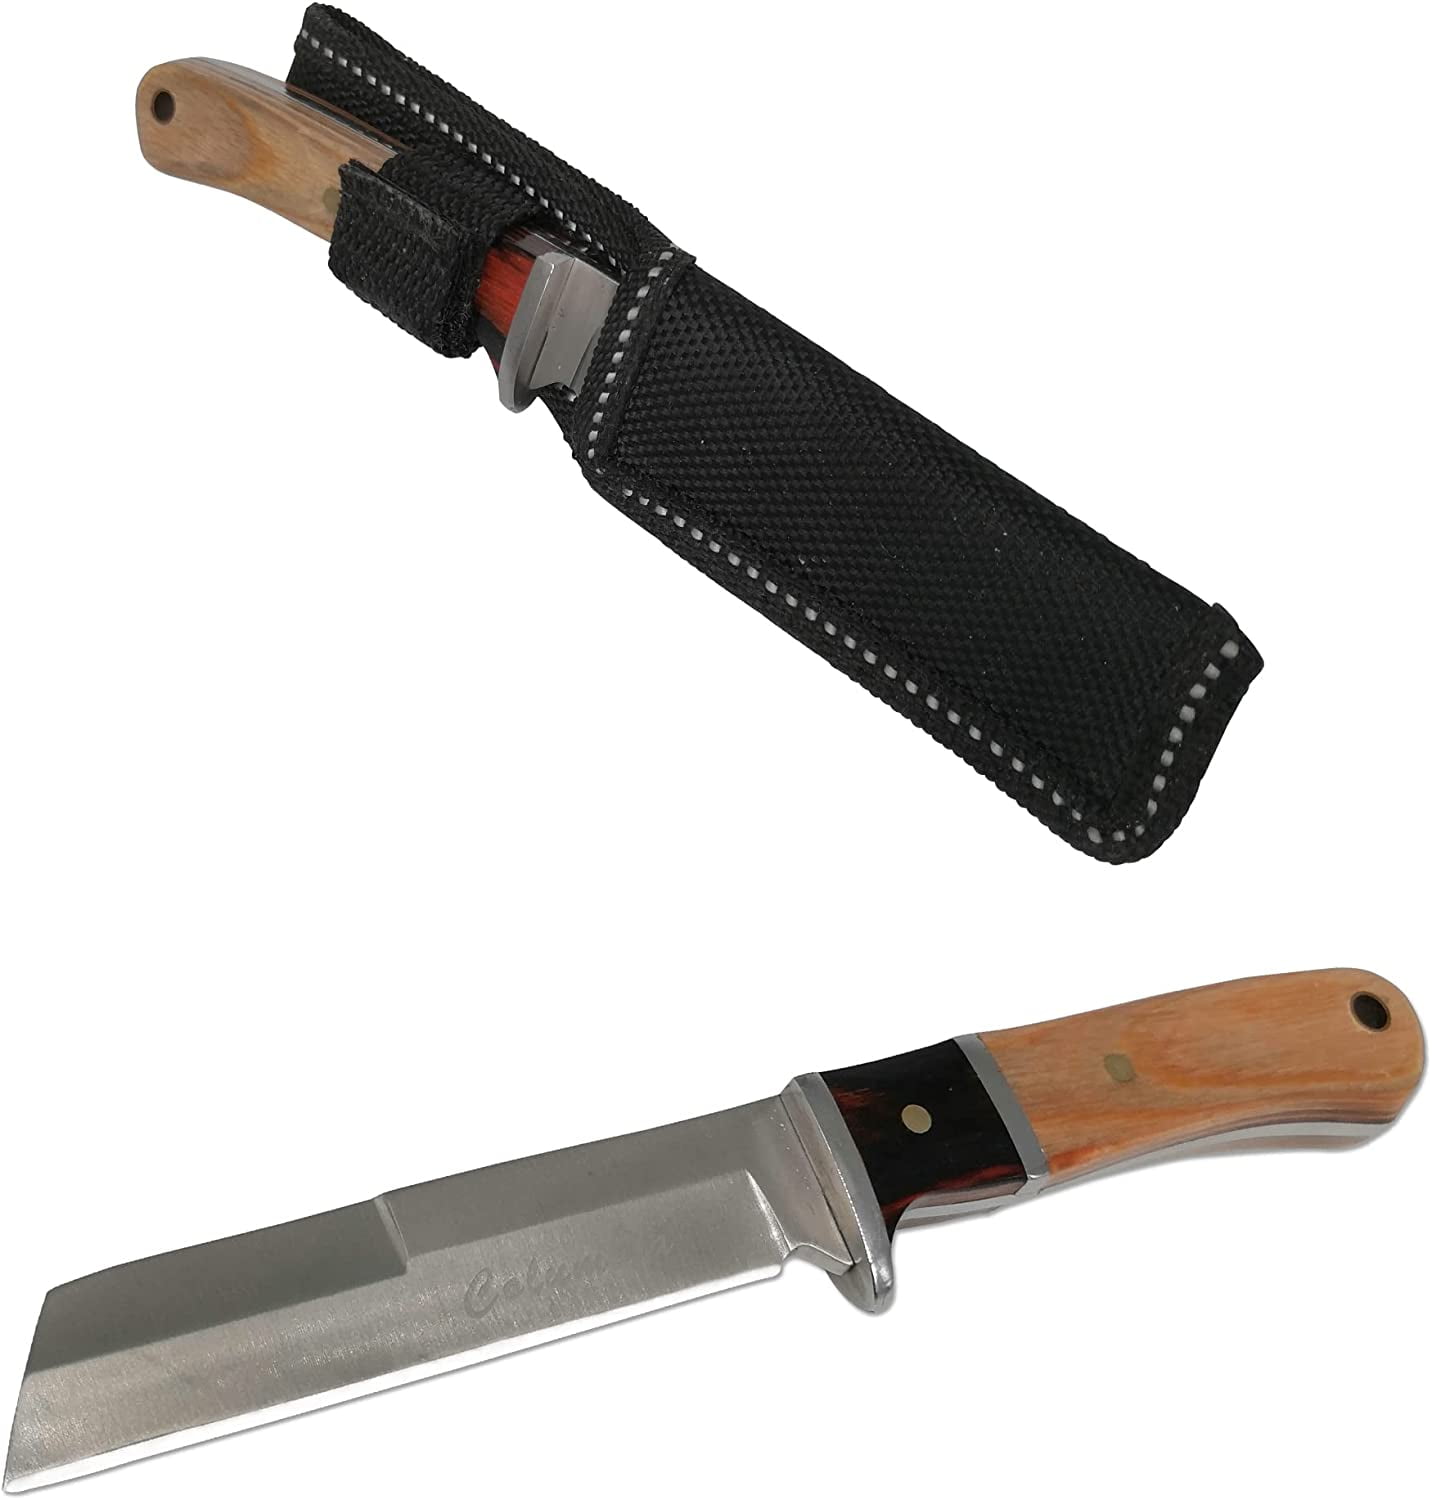  DOOM BLADE 12 Fixed Blade Hunting Knife, Super Sharp